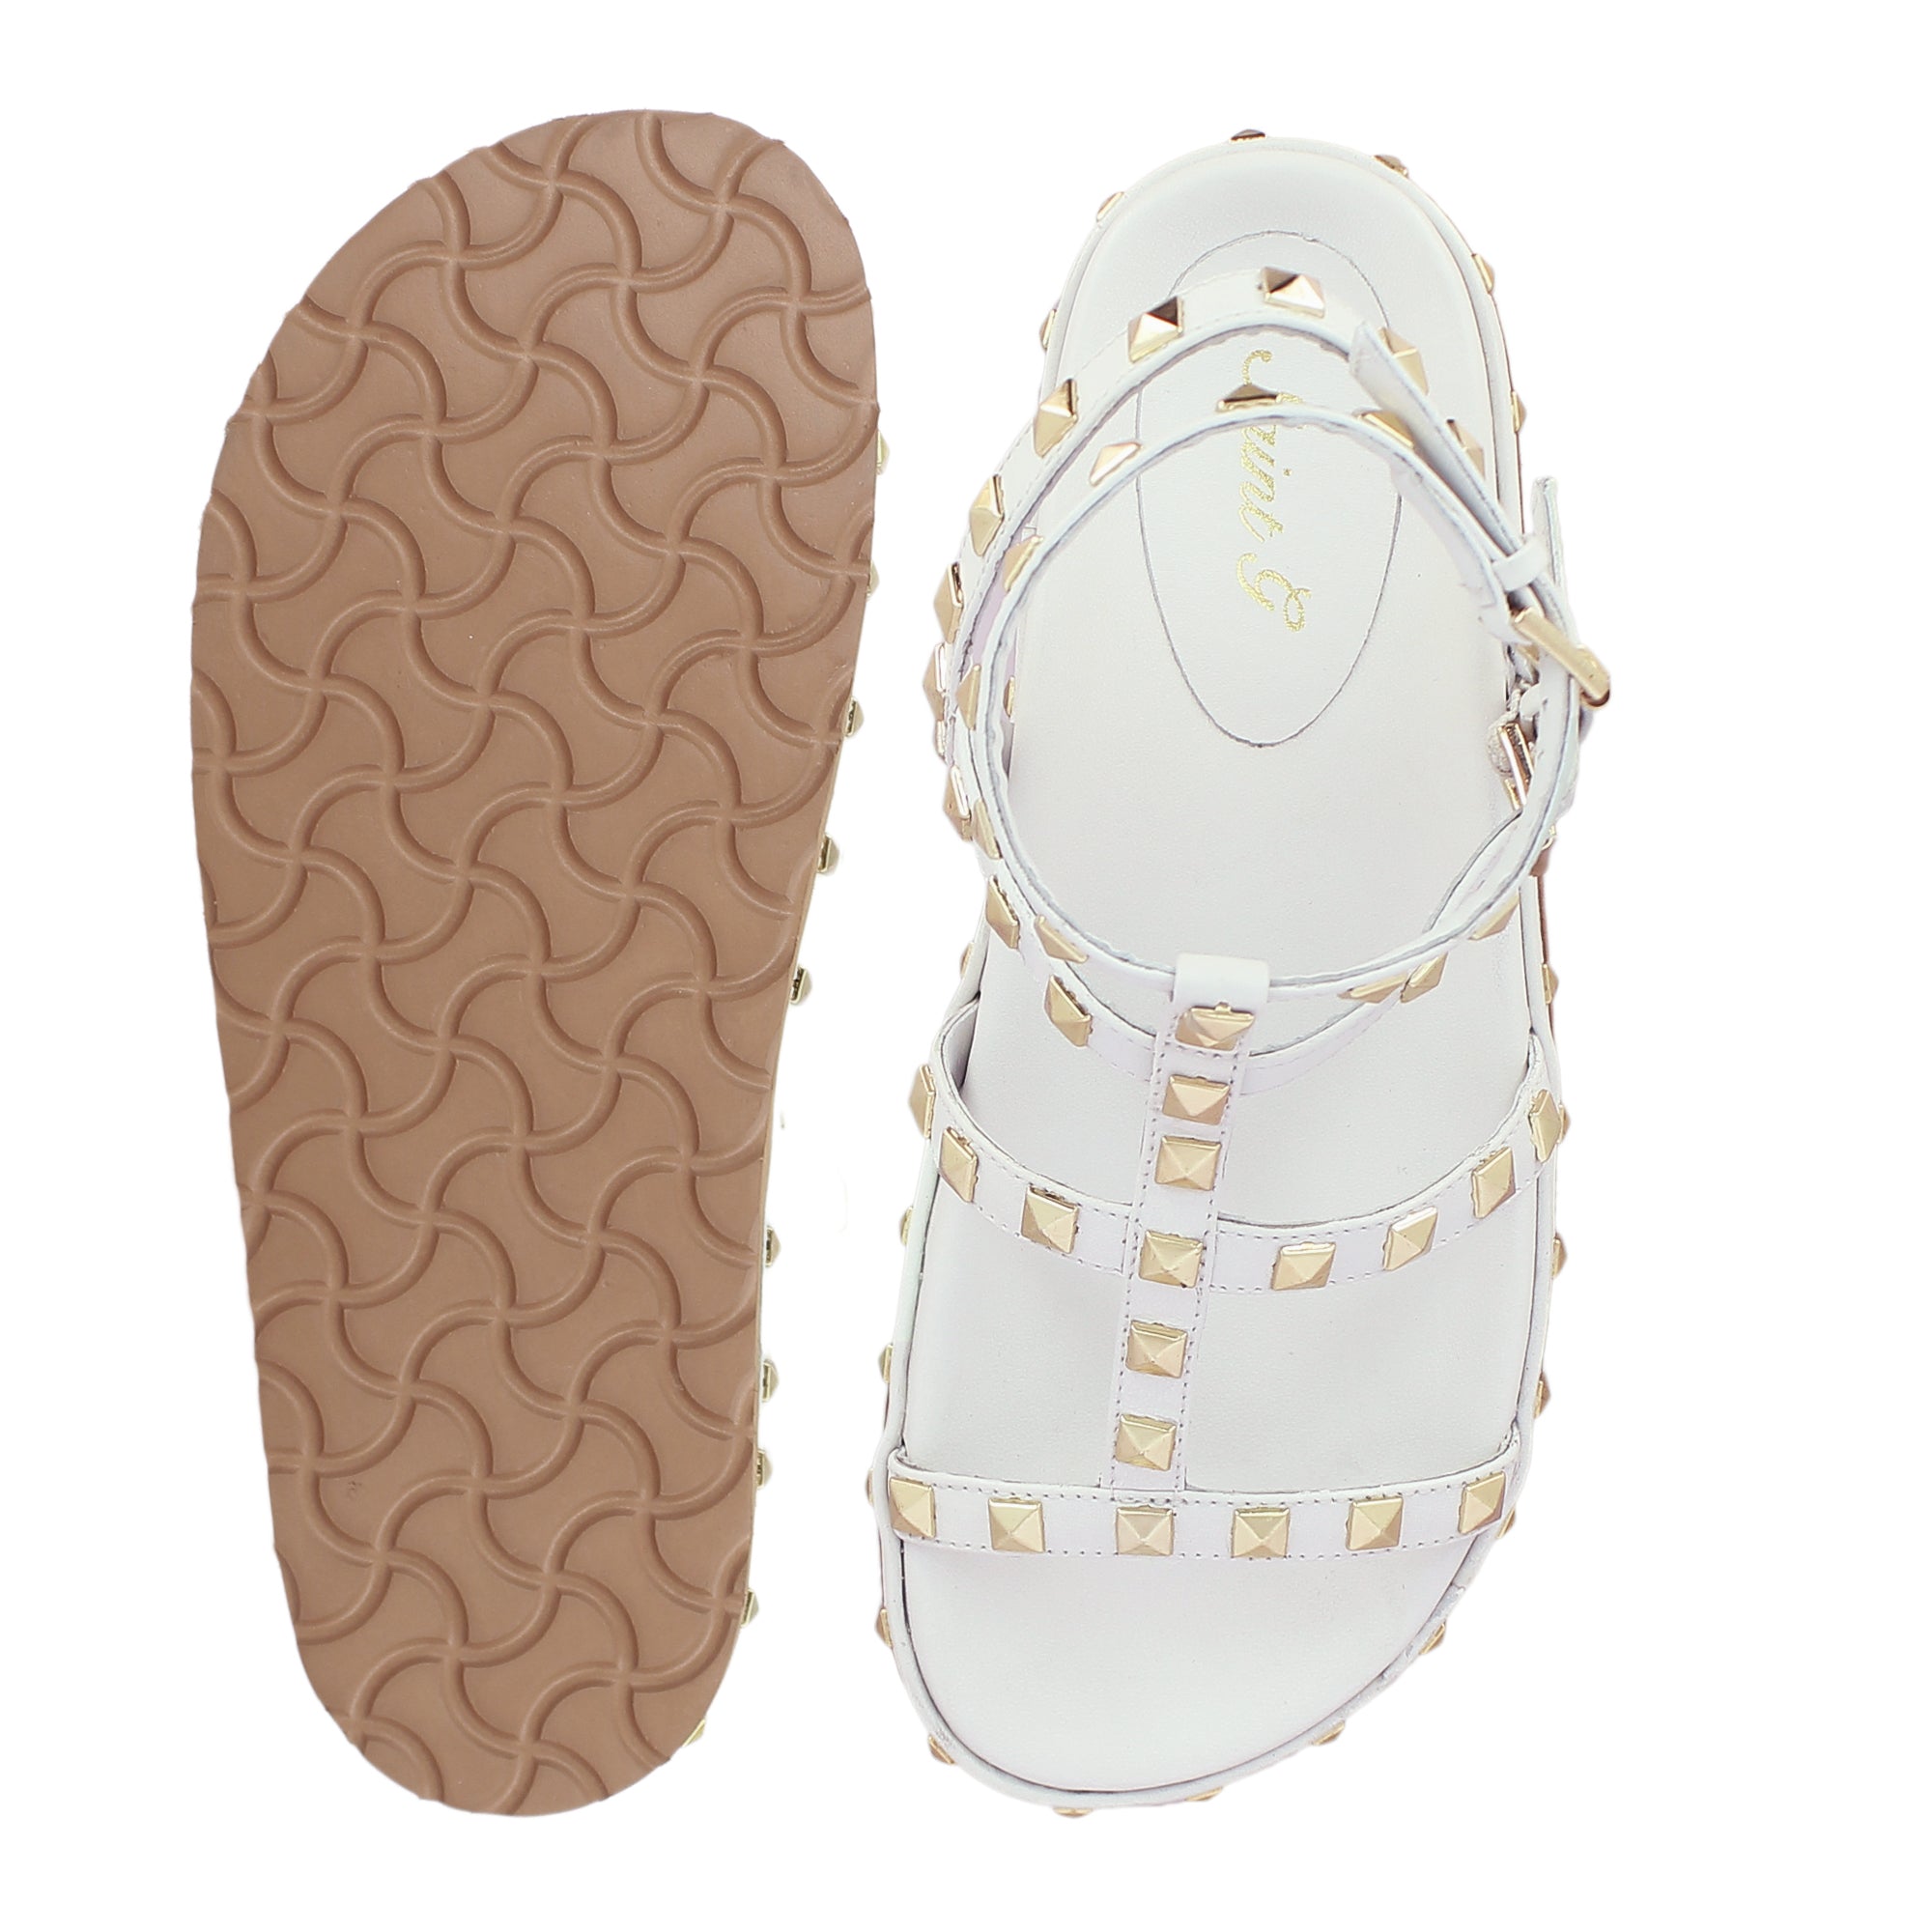 Alicia Studded Strappy Sandals - White